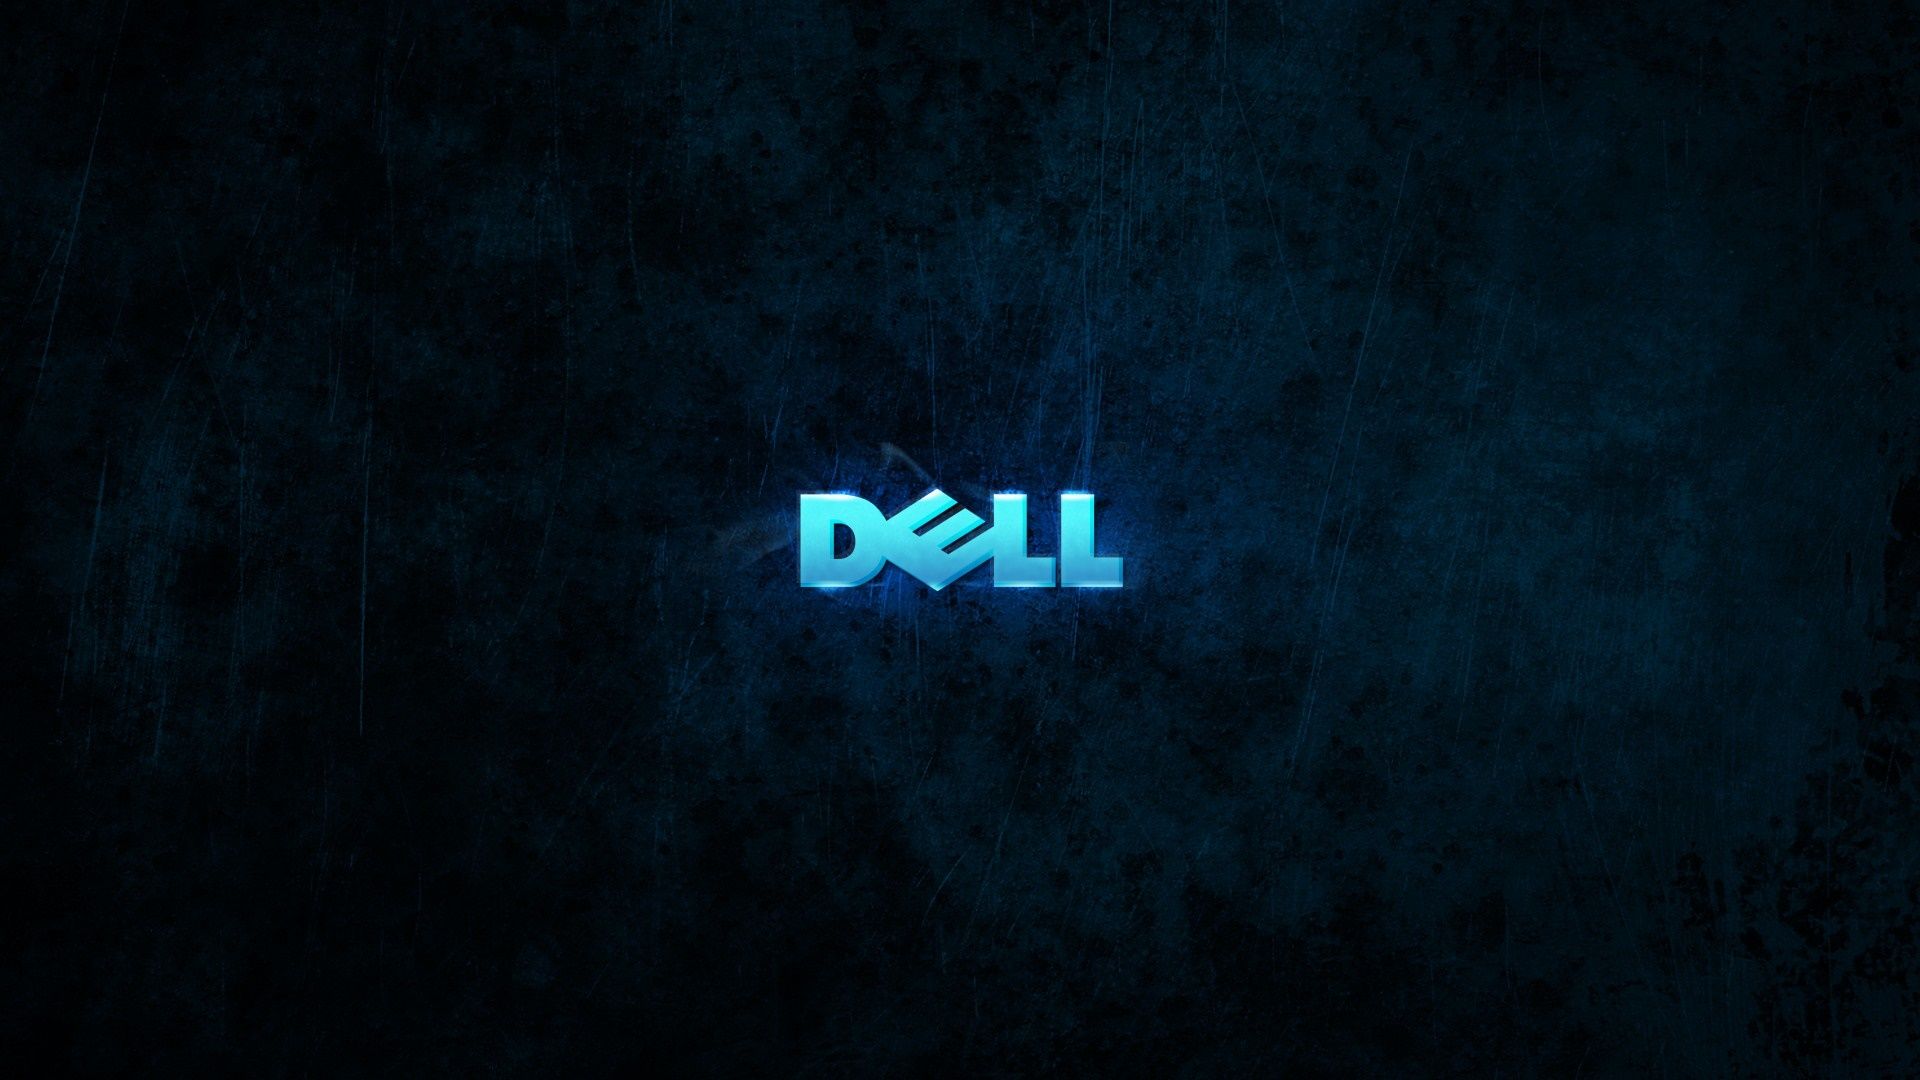  Dell Hintergrundbild 1920x1080. dell 1080P, 2k, 4k HD wallpaper, background free download